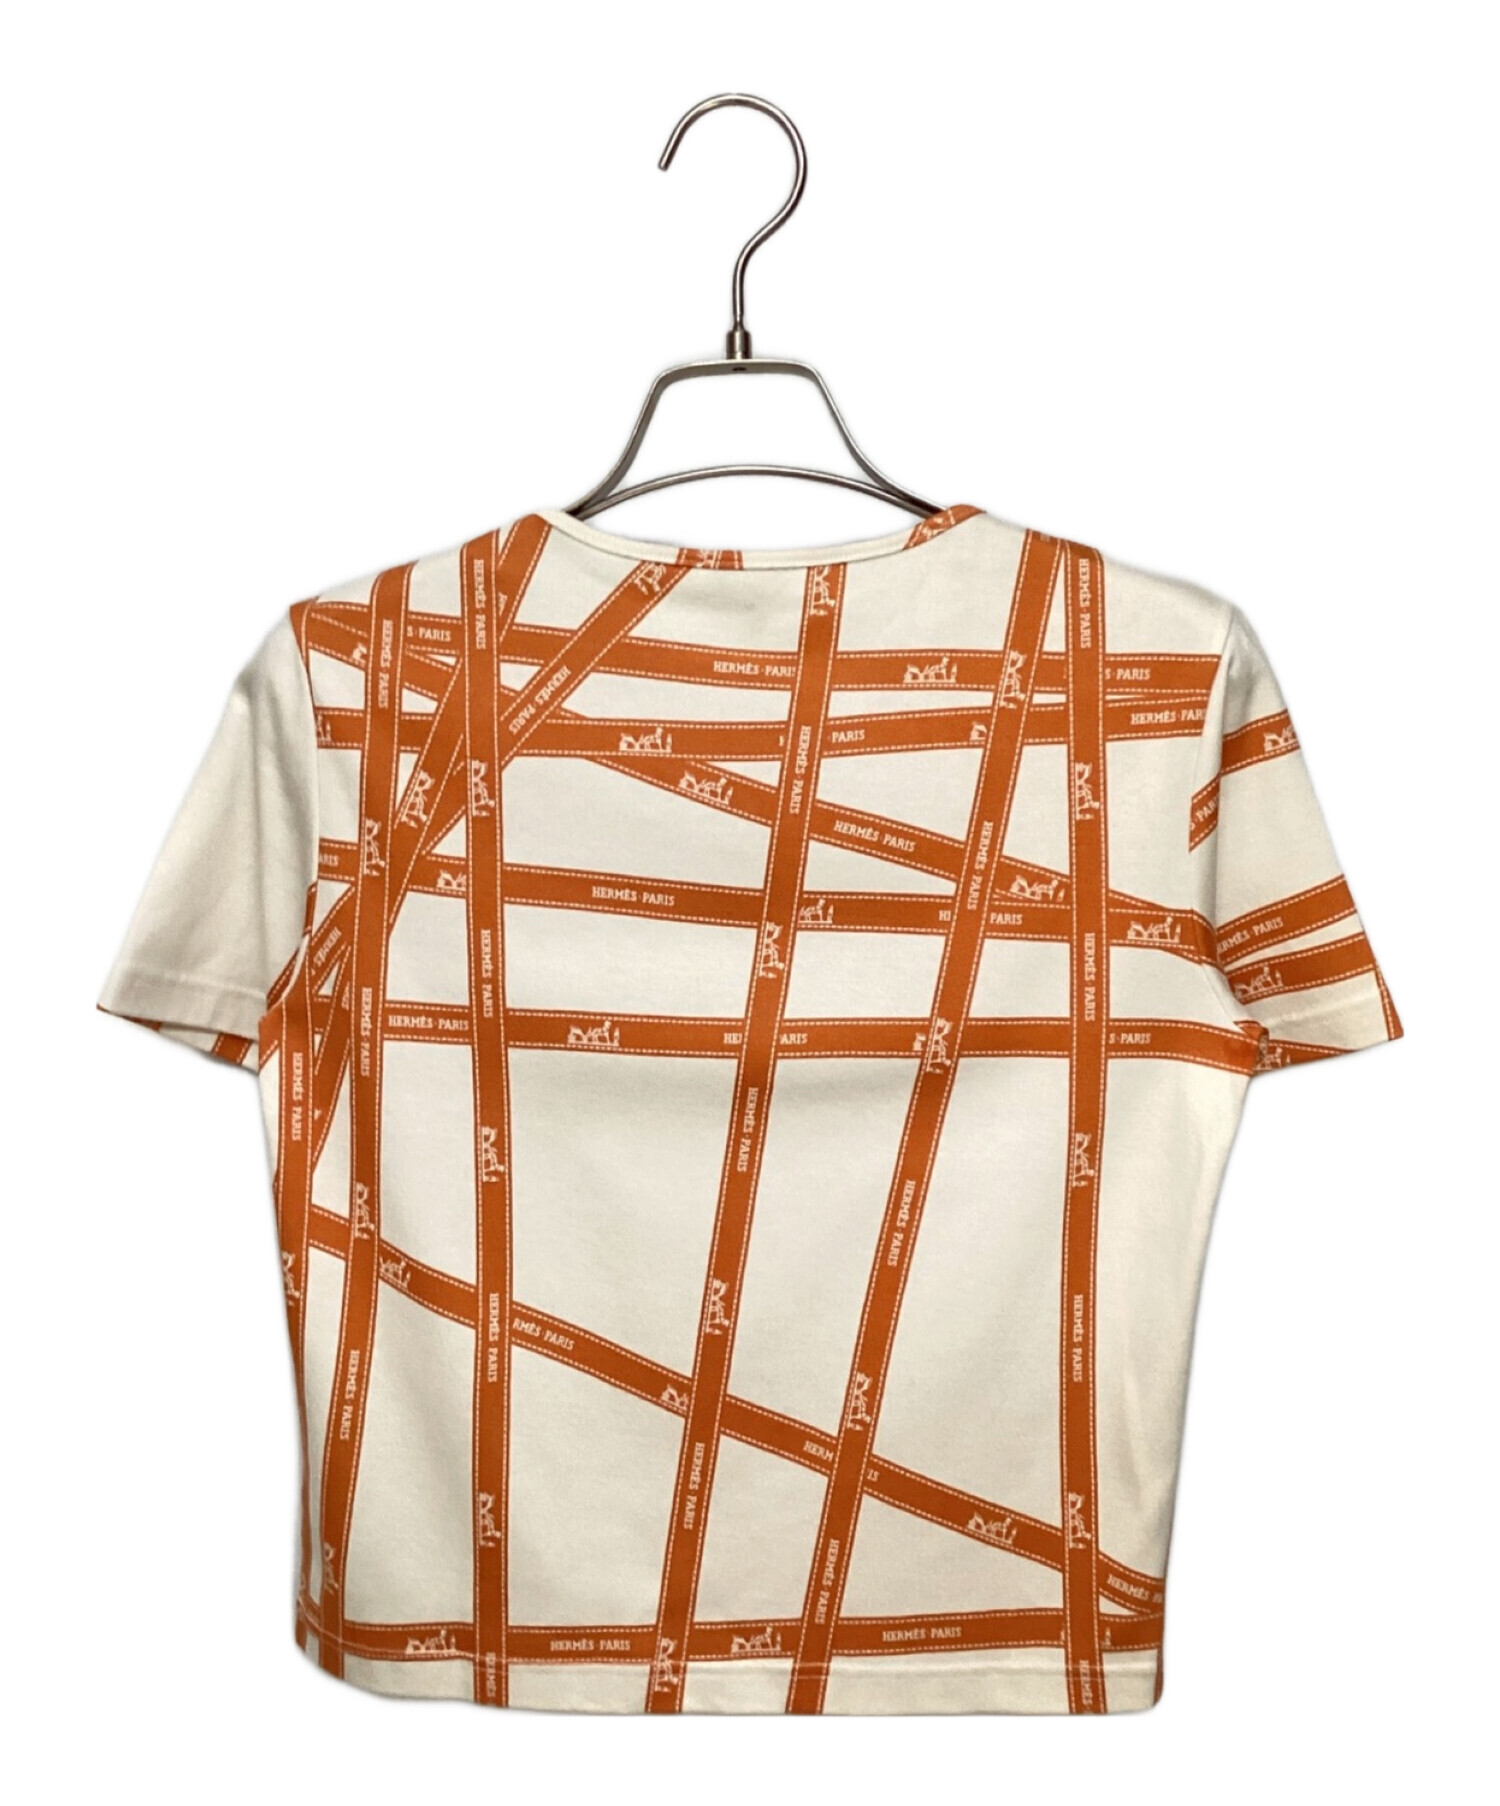 HERMES (エルメス) リボン柄Tシャツ ホワイト×オレンジ サイズ:ME